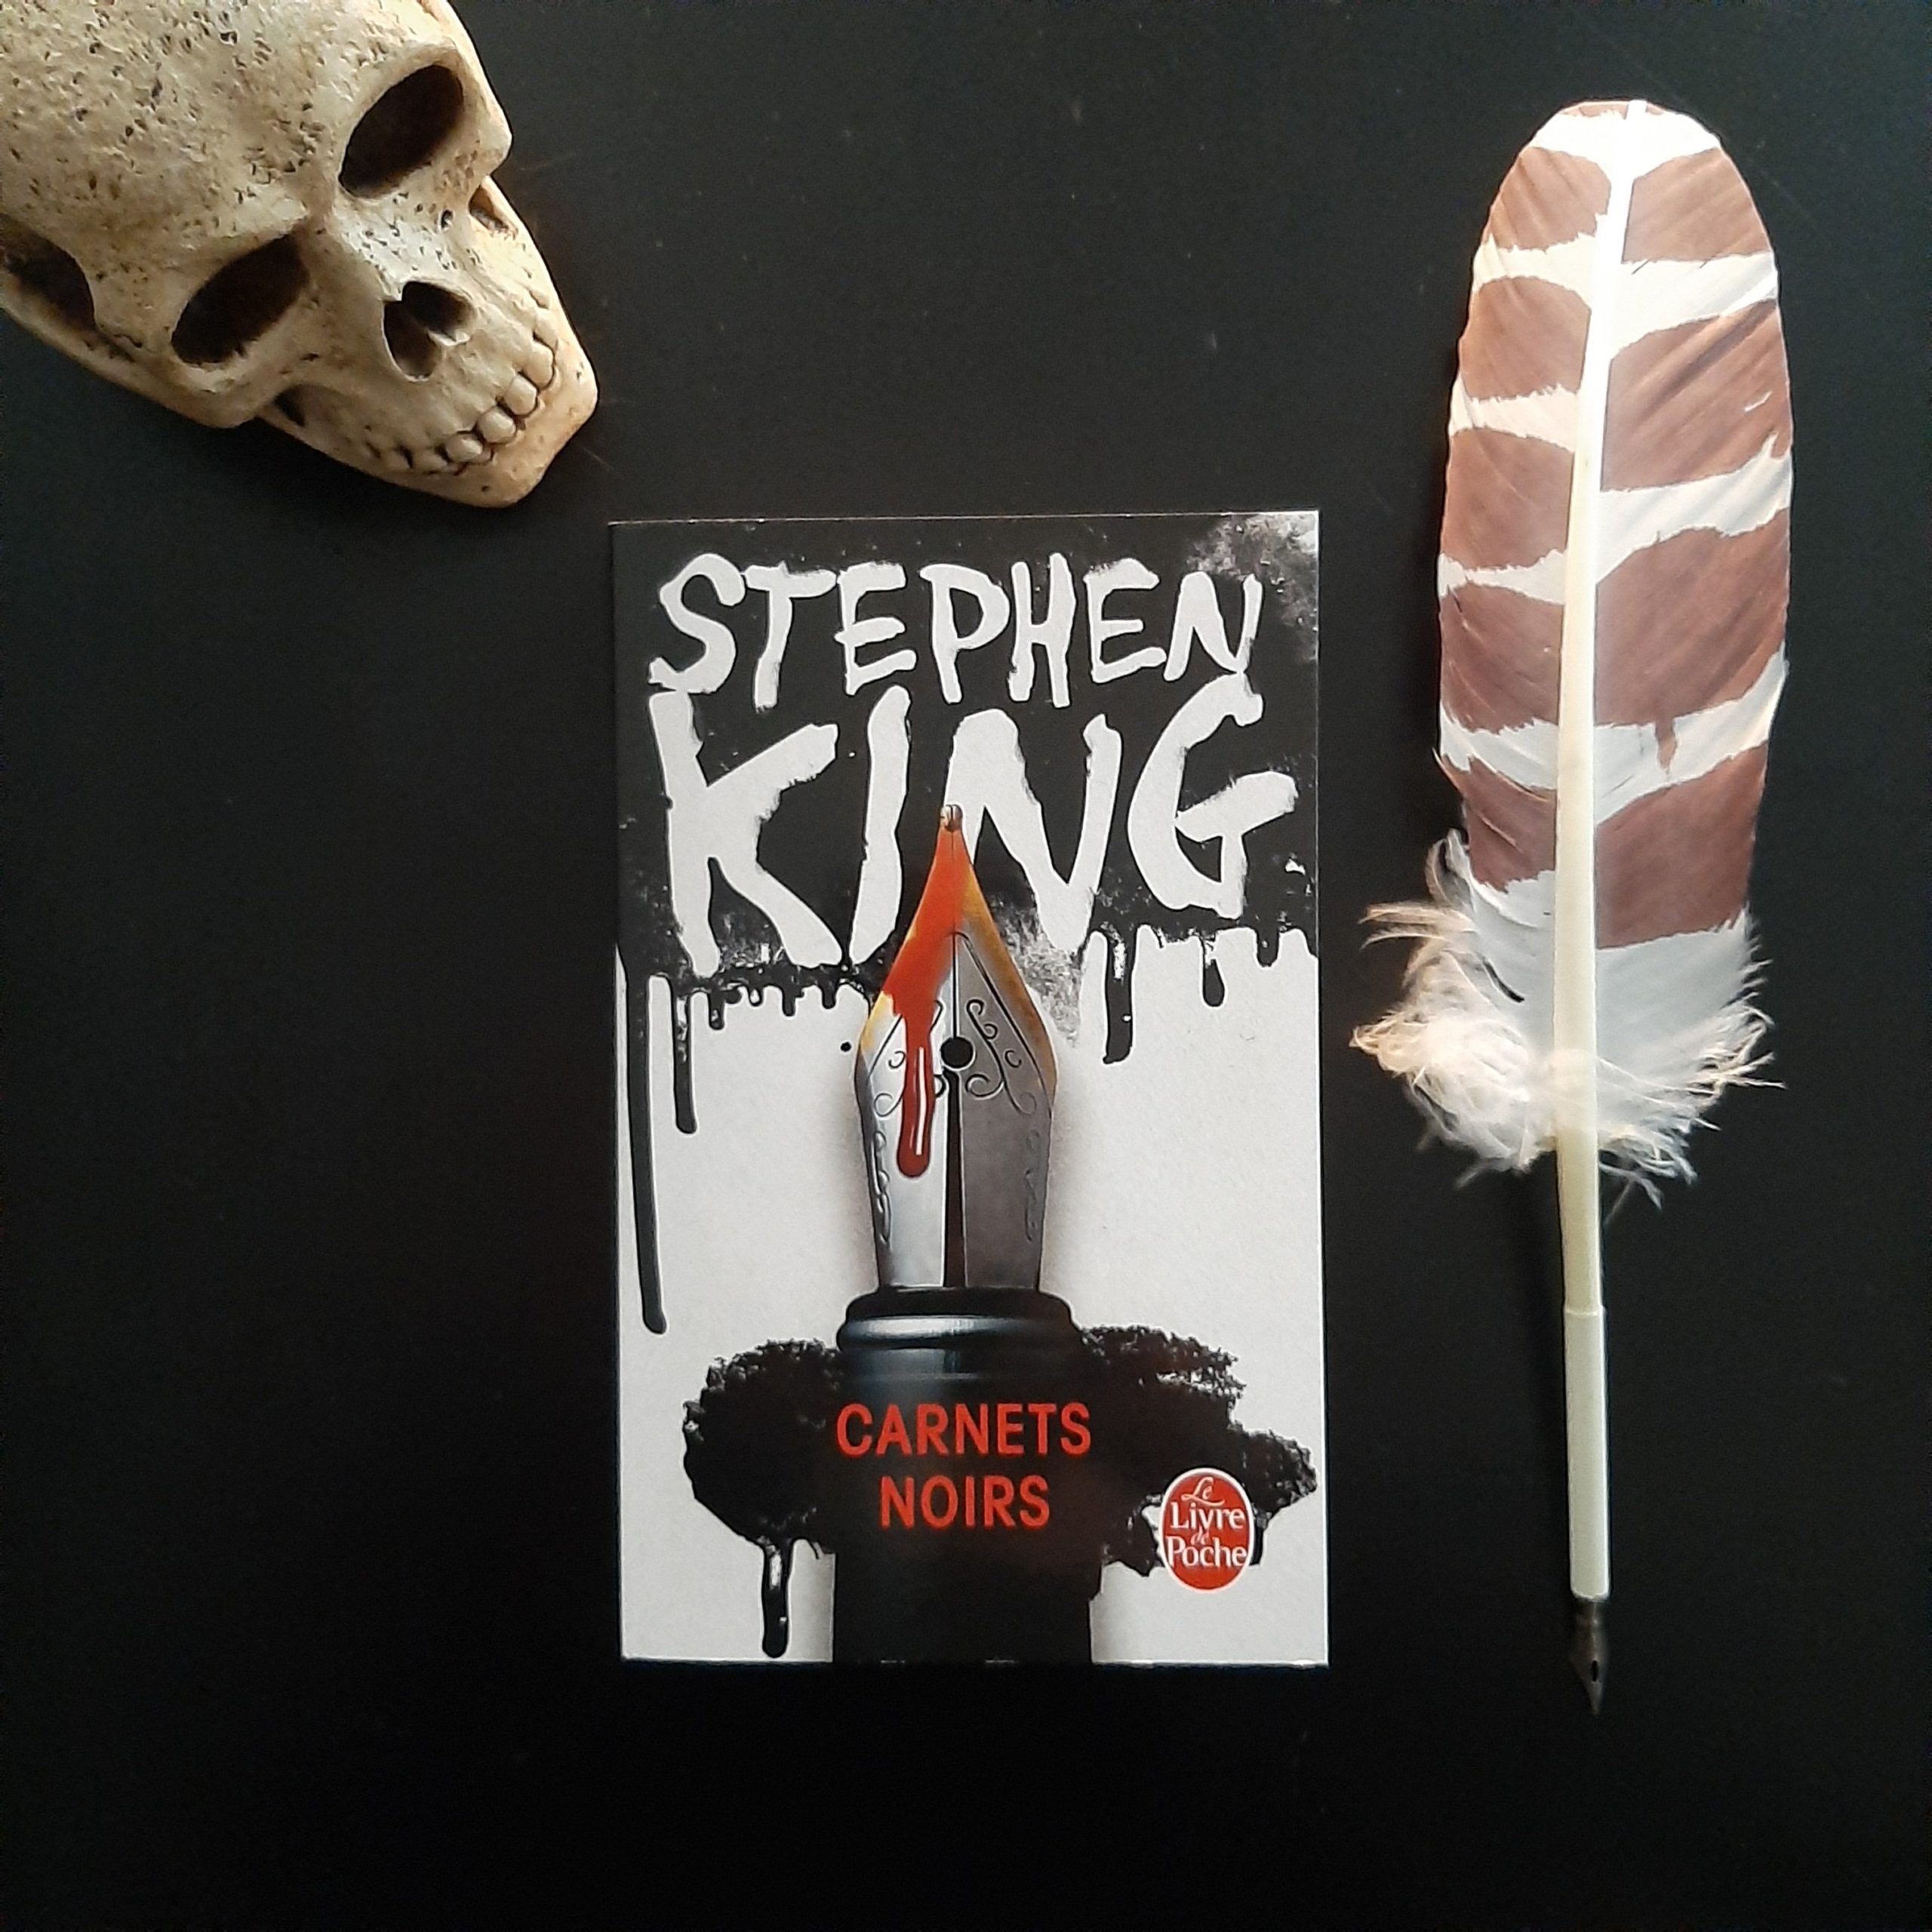 Carnet noirs de Stephen King